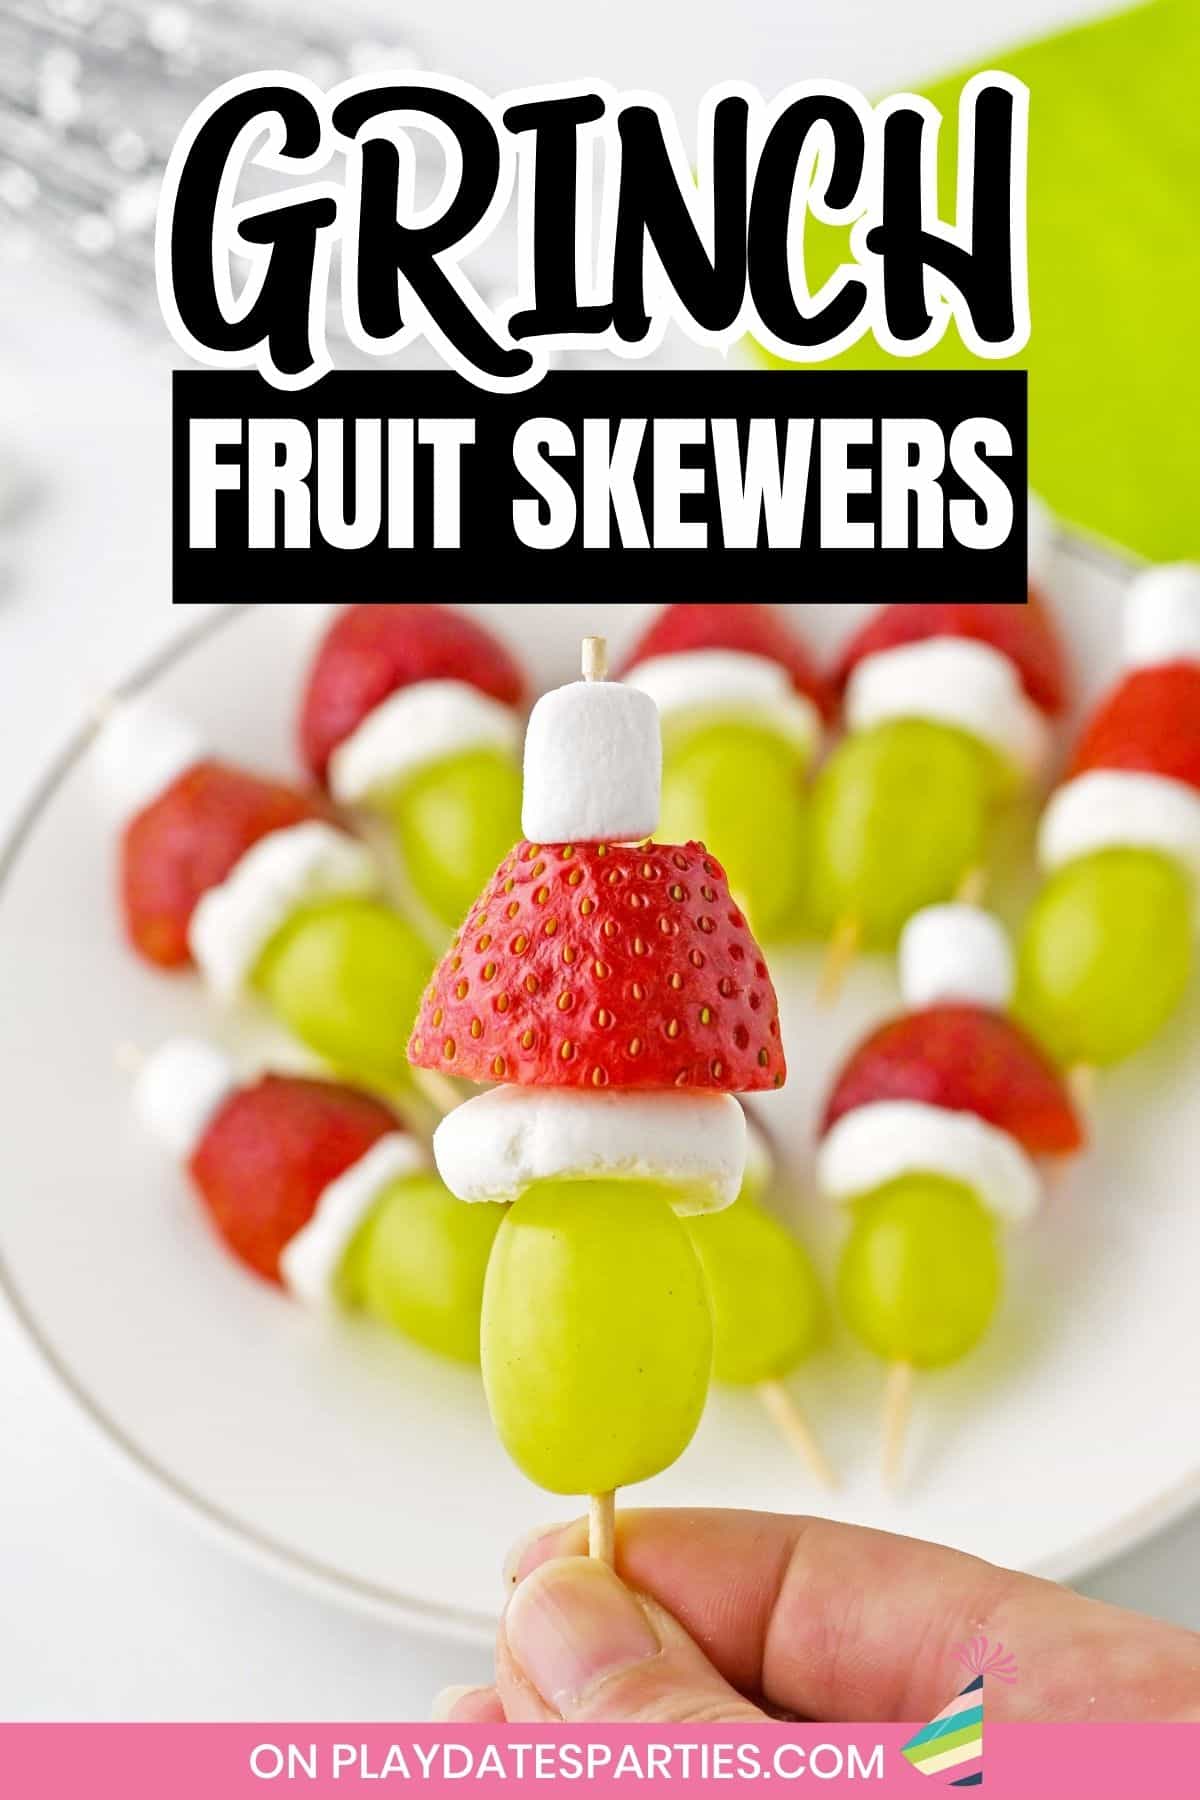 Grinch fruit skewers pin image.